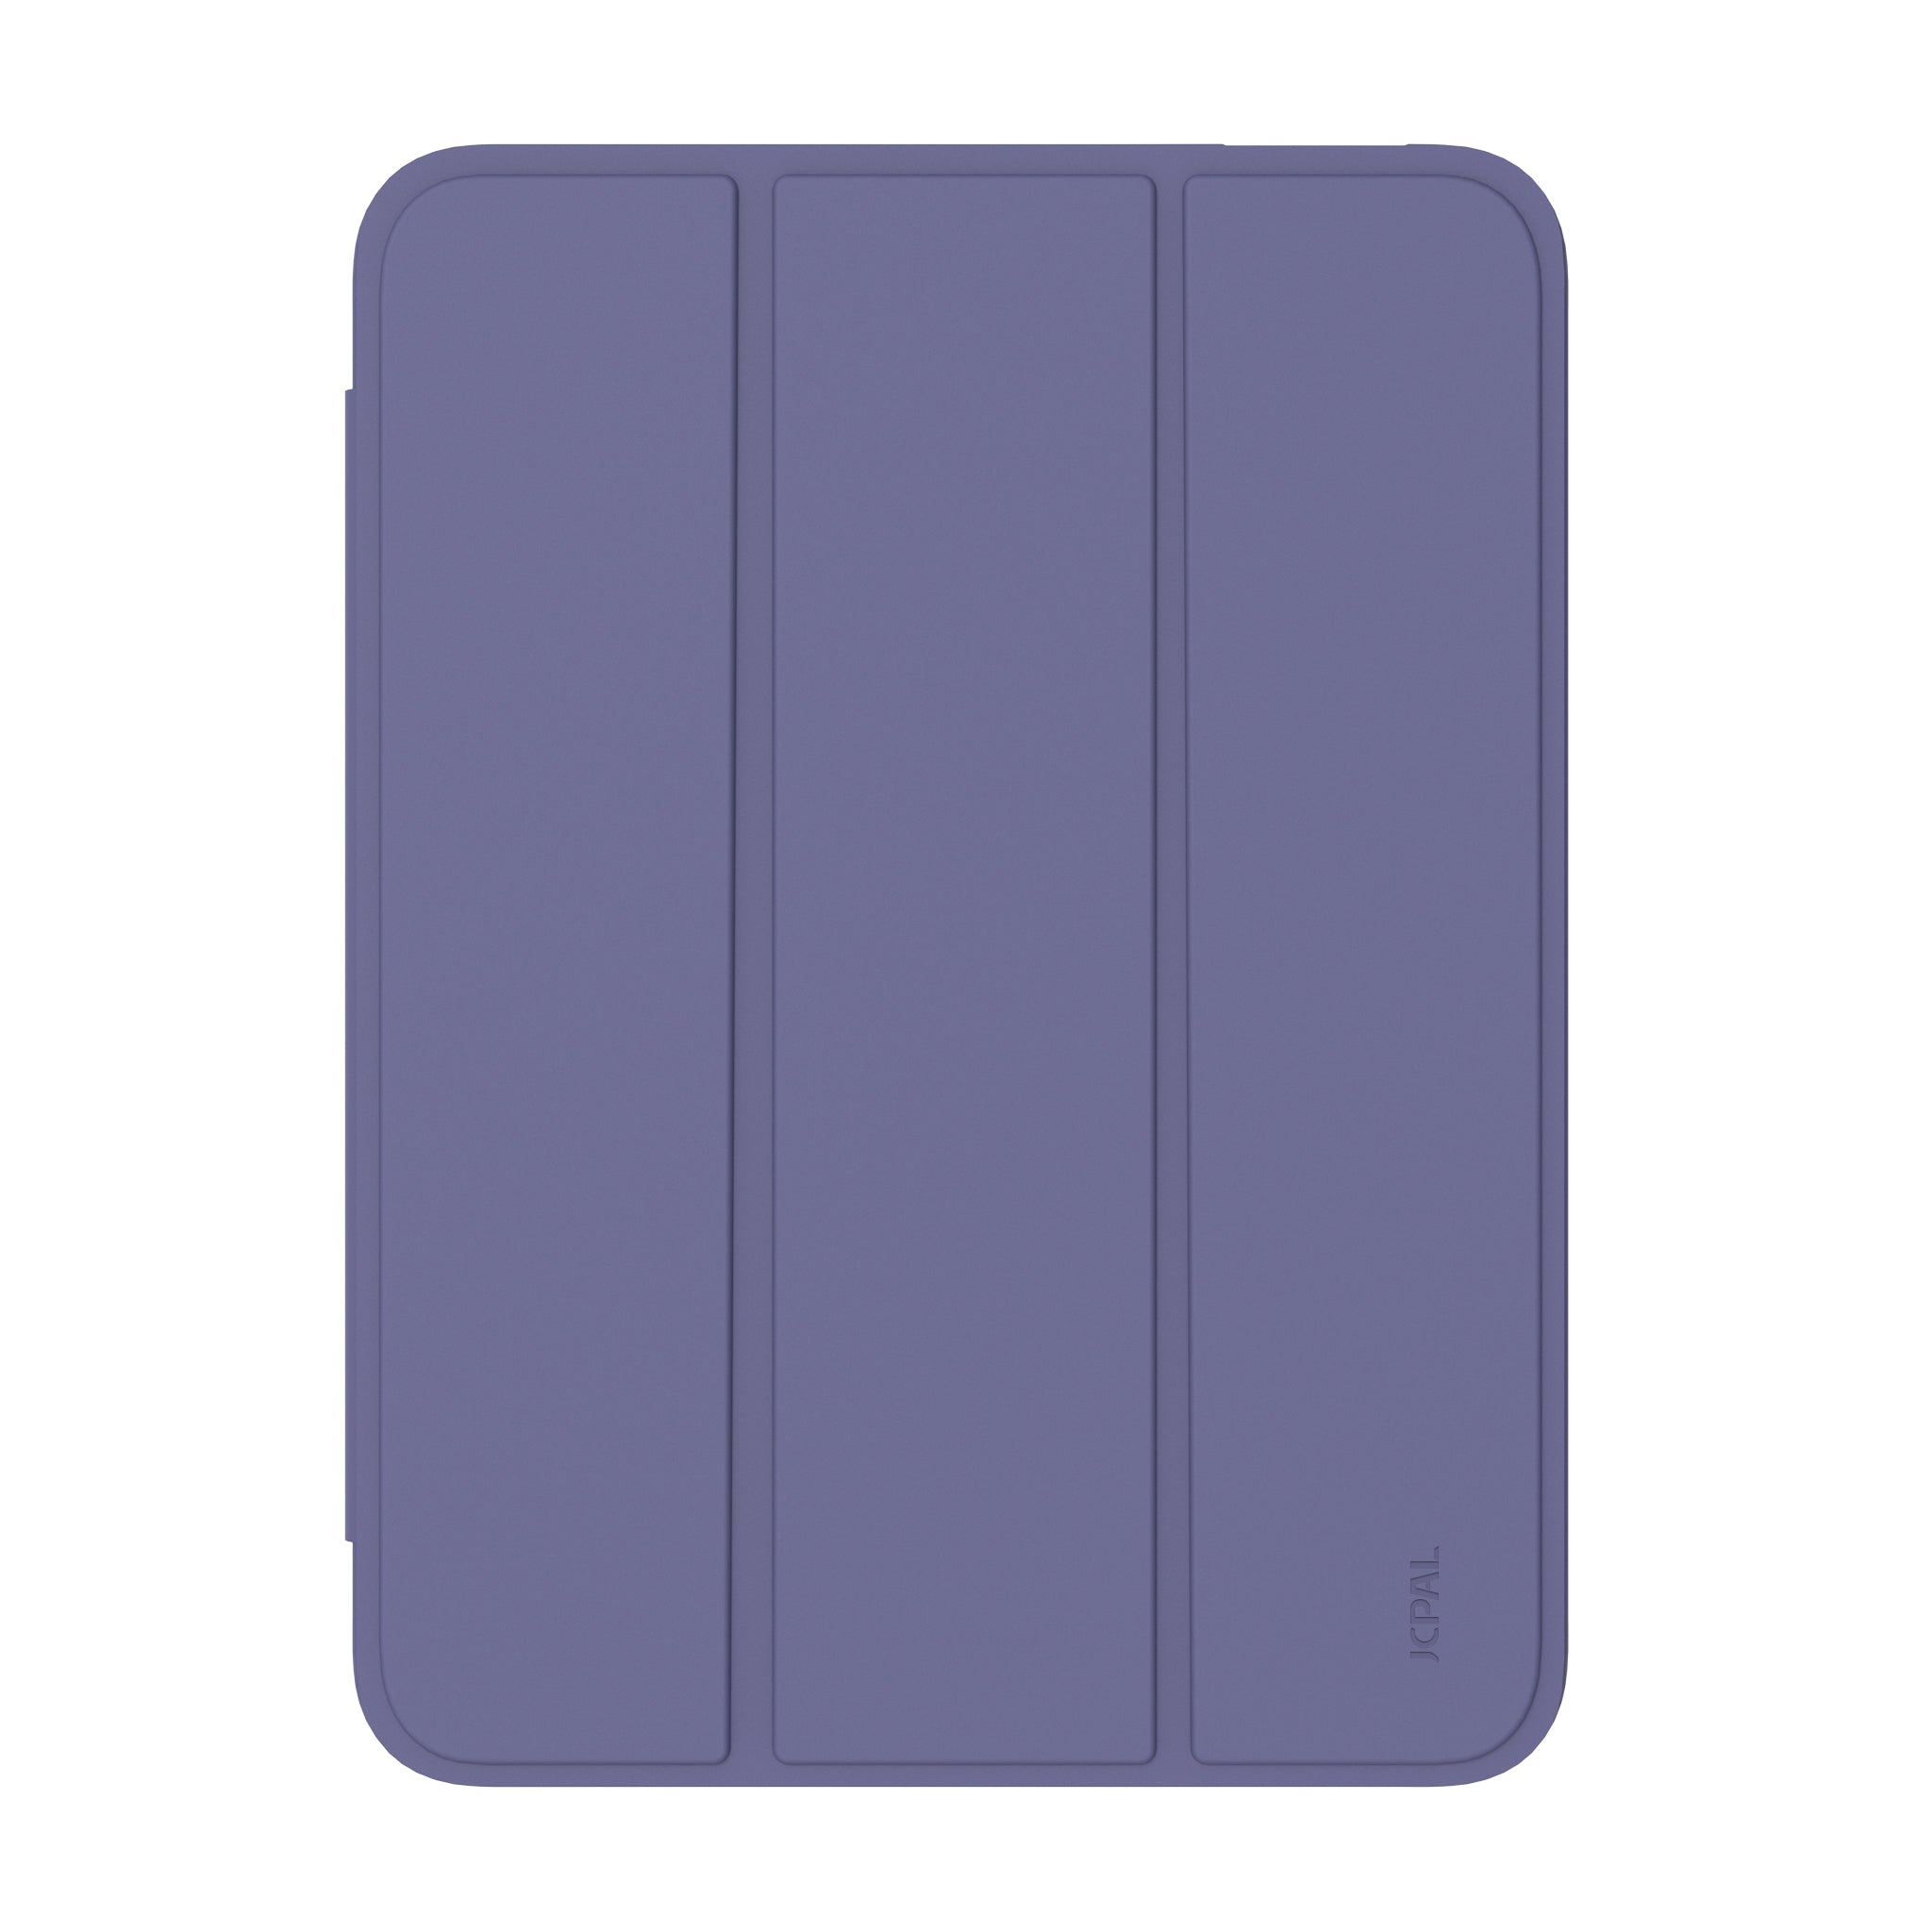 Ochronne etui folio DuraPro do iPada mini 6